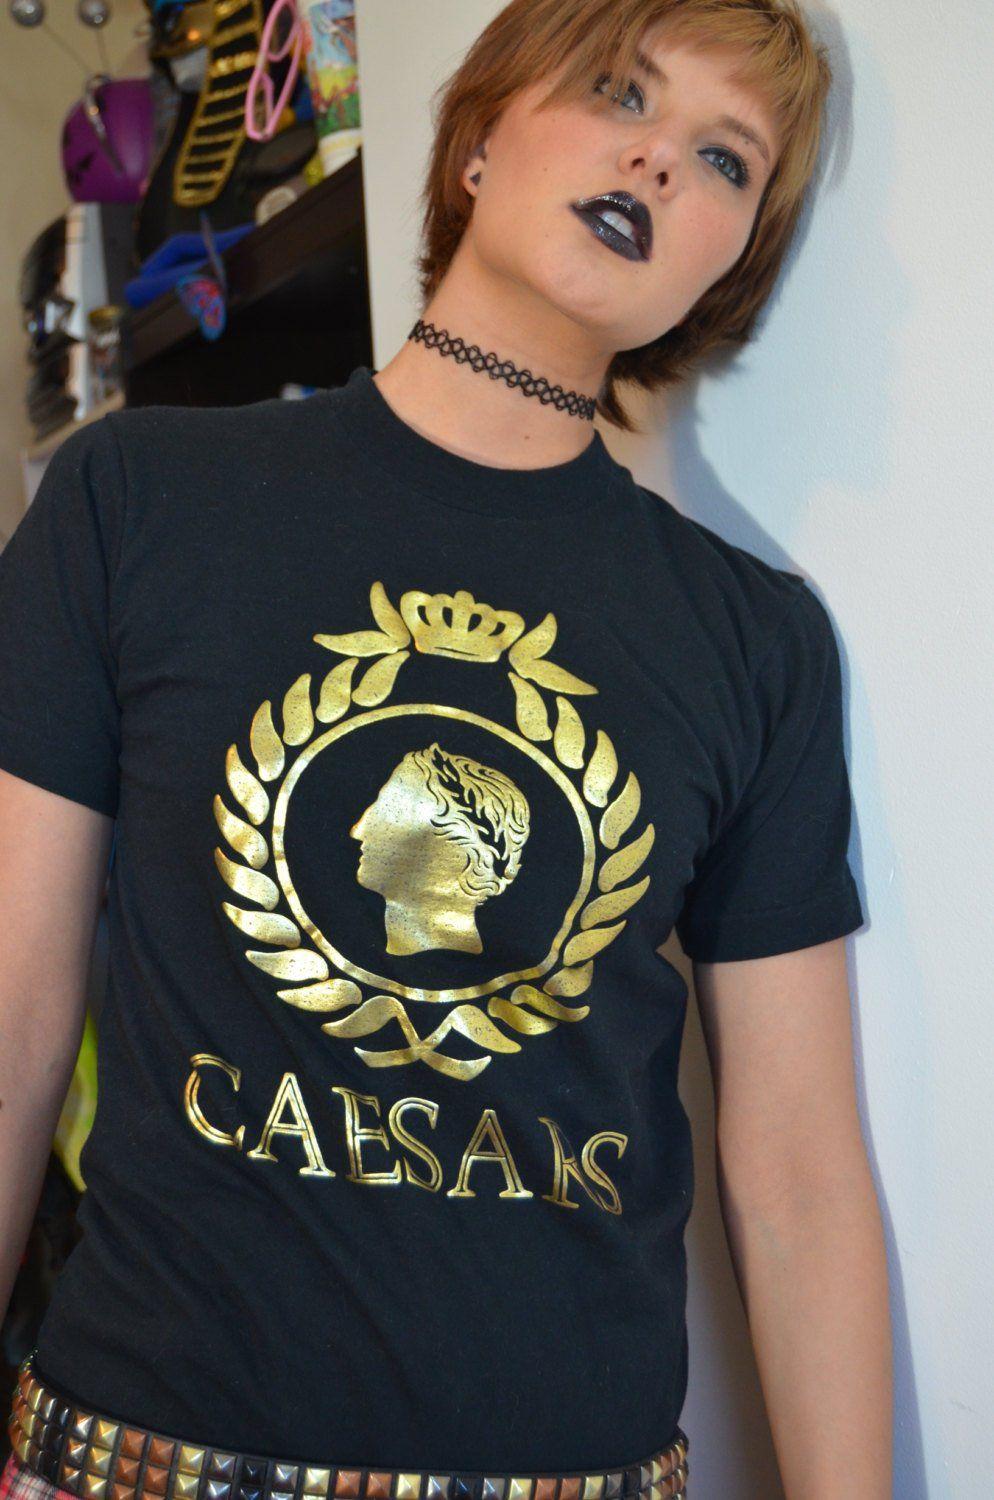 Casesar Palace Shirts Logo - Vintage 80s Caesars Palace T Shirt Tee, Rare Gold Foil Logo Print